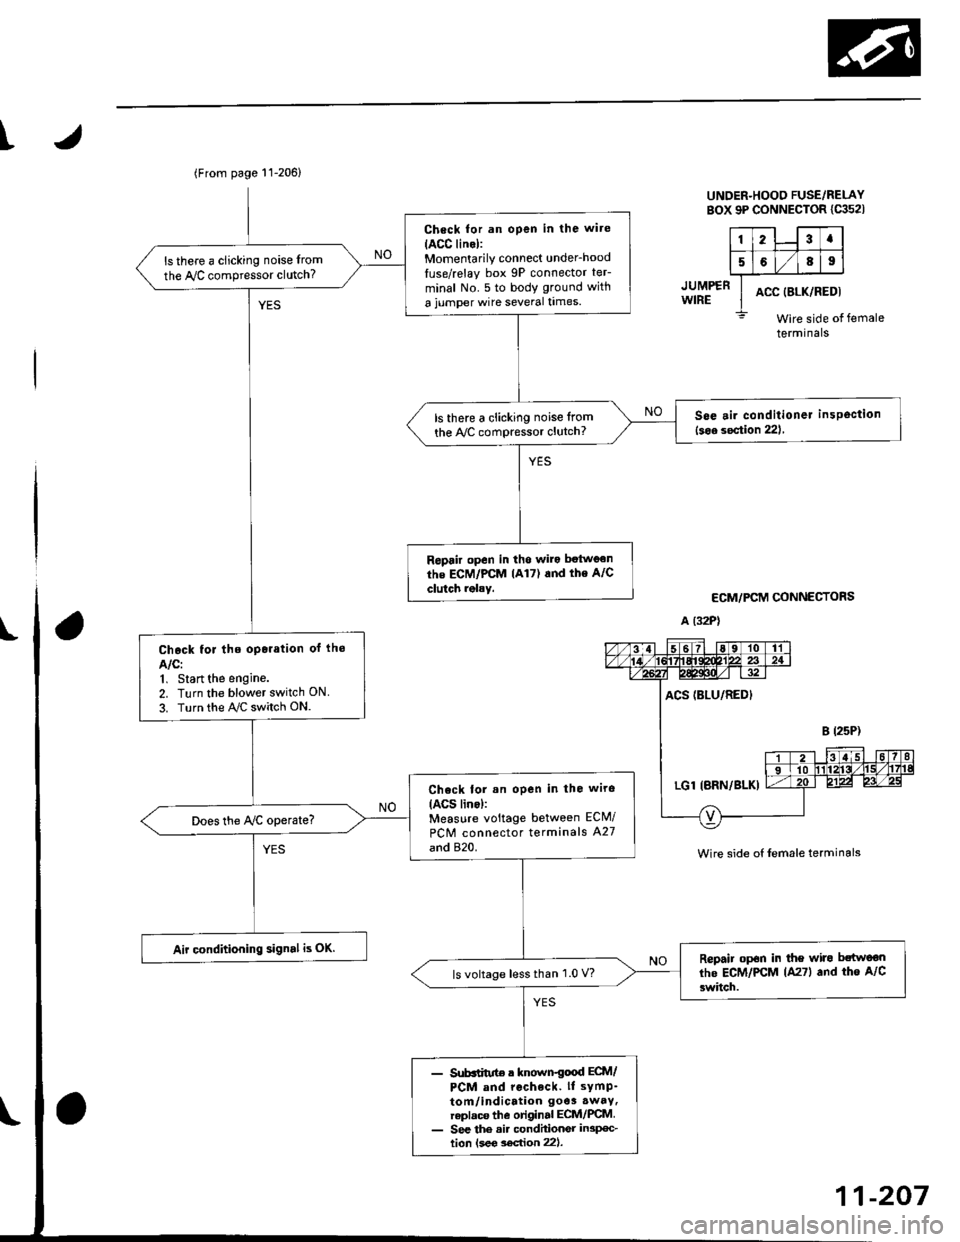 HONDA CIVIC 1999 6.G Workshop Manual I
JUMP€RWIRE
UNDER-HOOO FUSE/RELAYsox 9P coNNEcroR lca52l
123a
5689
ACC (8LK/REDI
Wire side ofterminals
ECM/PCM CONNECTORS
A (32P1
female
Wire side of {emale terminals
(From page 11-206)
Check for a